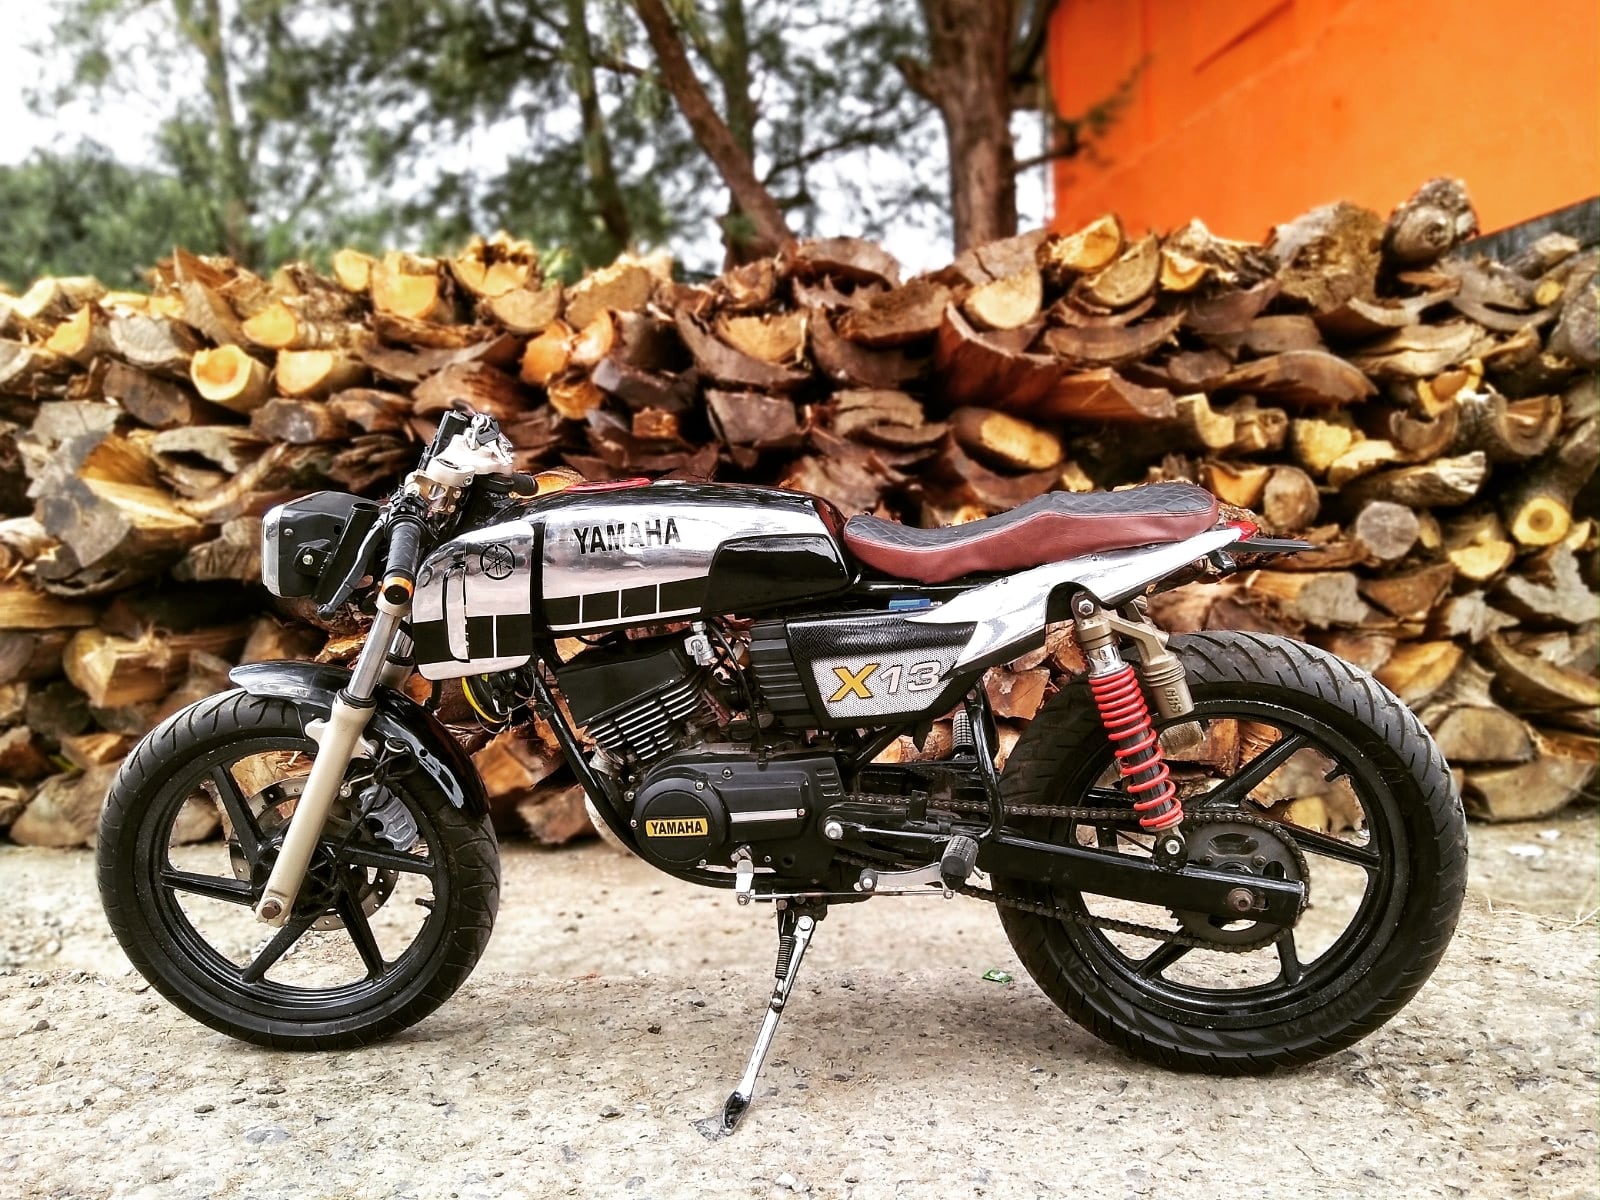 Meet Yamaha X13 (Modified RX 135) by Abishek Dey - close-up